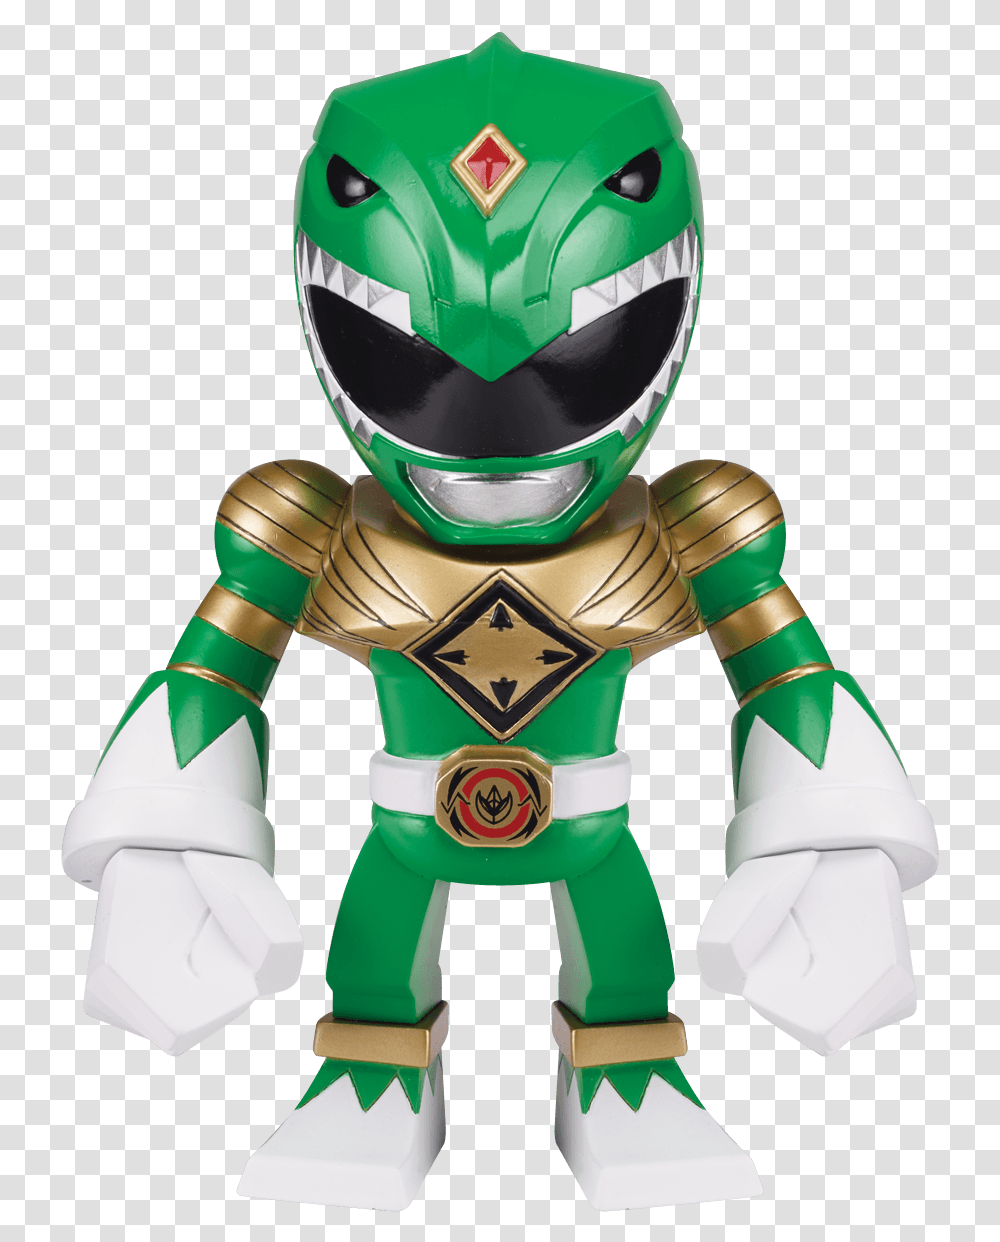 Green Ranger Power Rangers Mighty Morphin Green Rangers, Toy, Helmet, Apparel Transparent Png